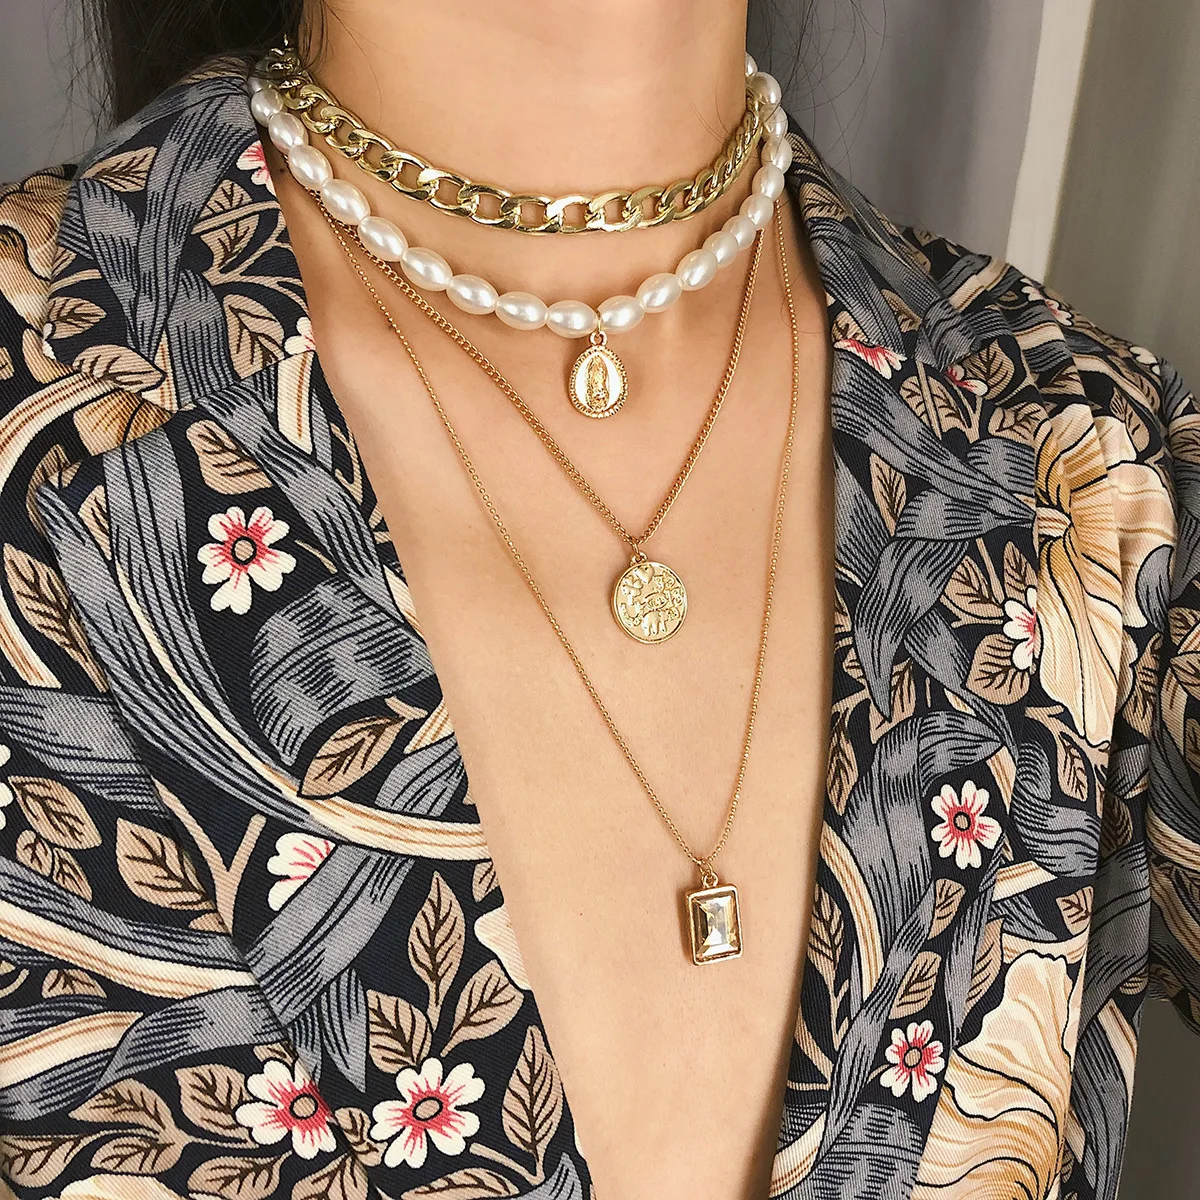 Multilayer Fashion Women Pearl Clavicle Choker Necklace Charm Bib Chain Jewelry